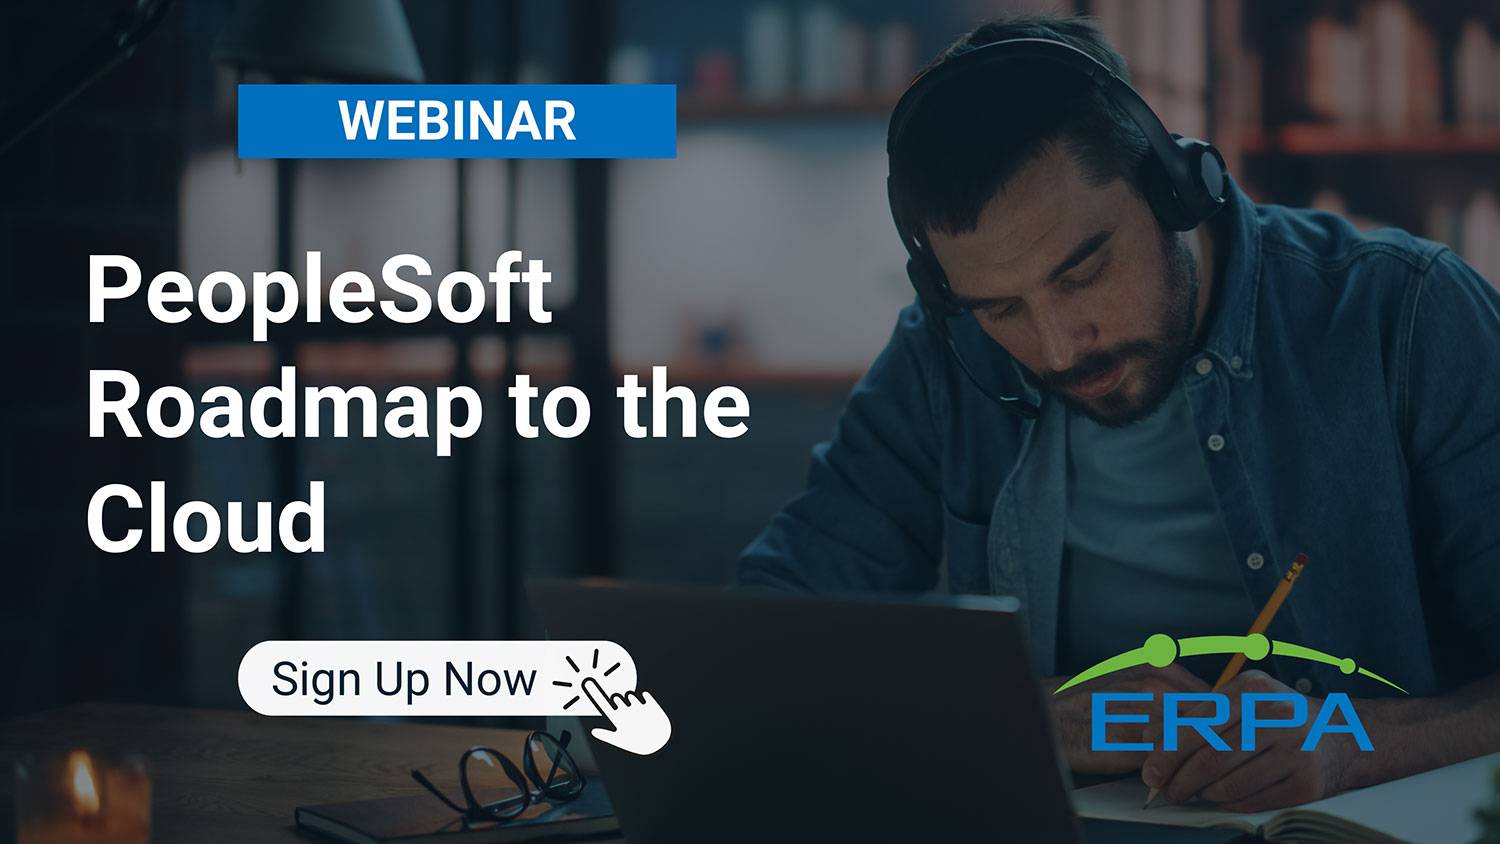 ERPA Webinar: PeopleSoft Roadmap to the Cloud